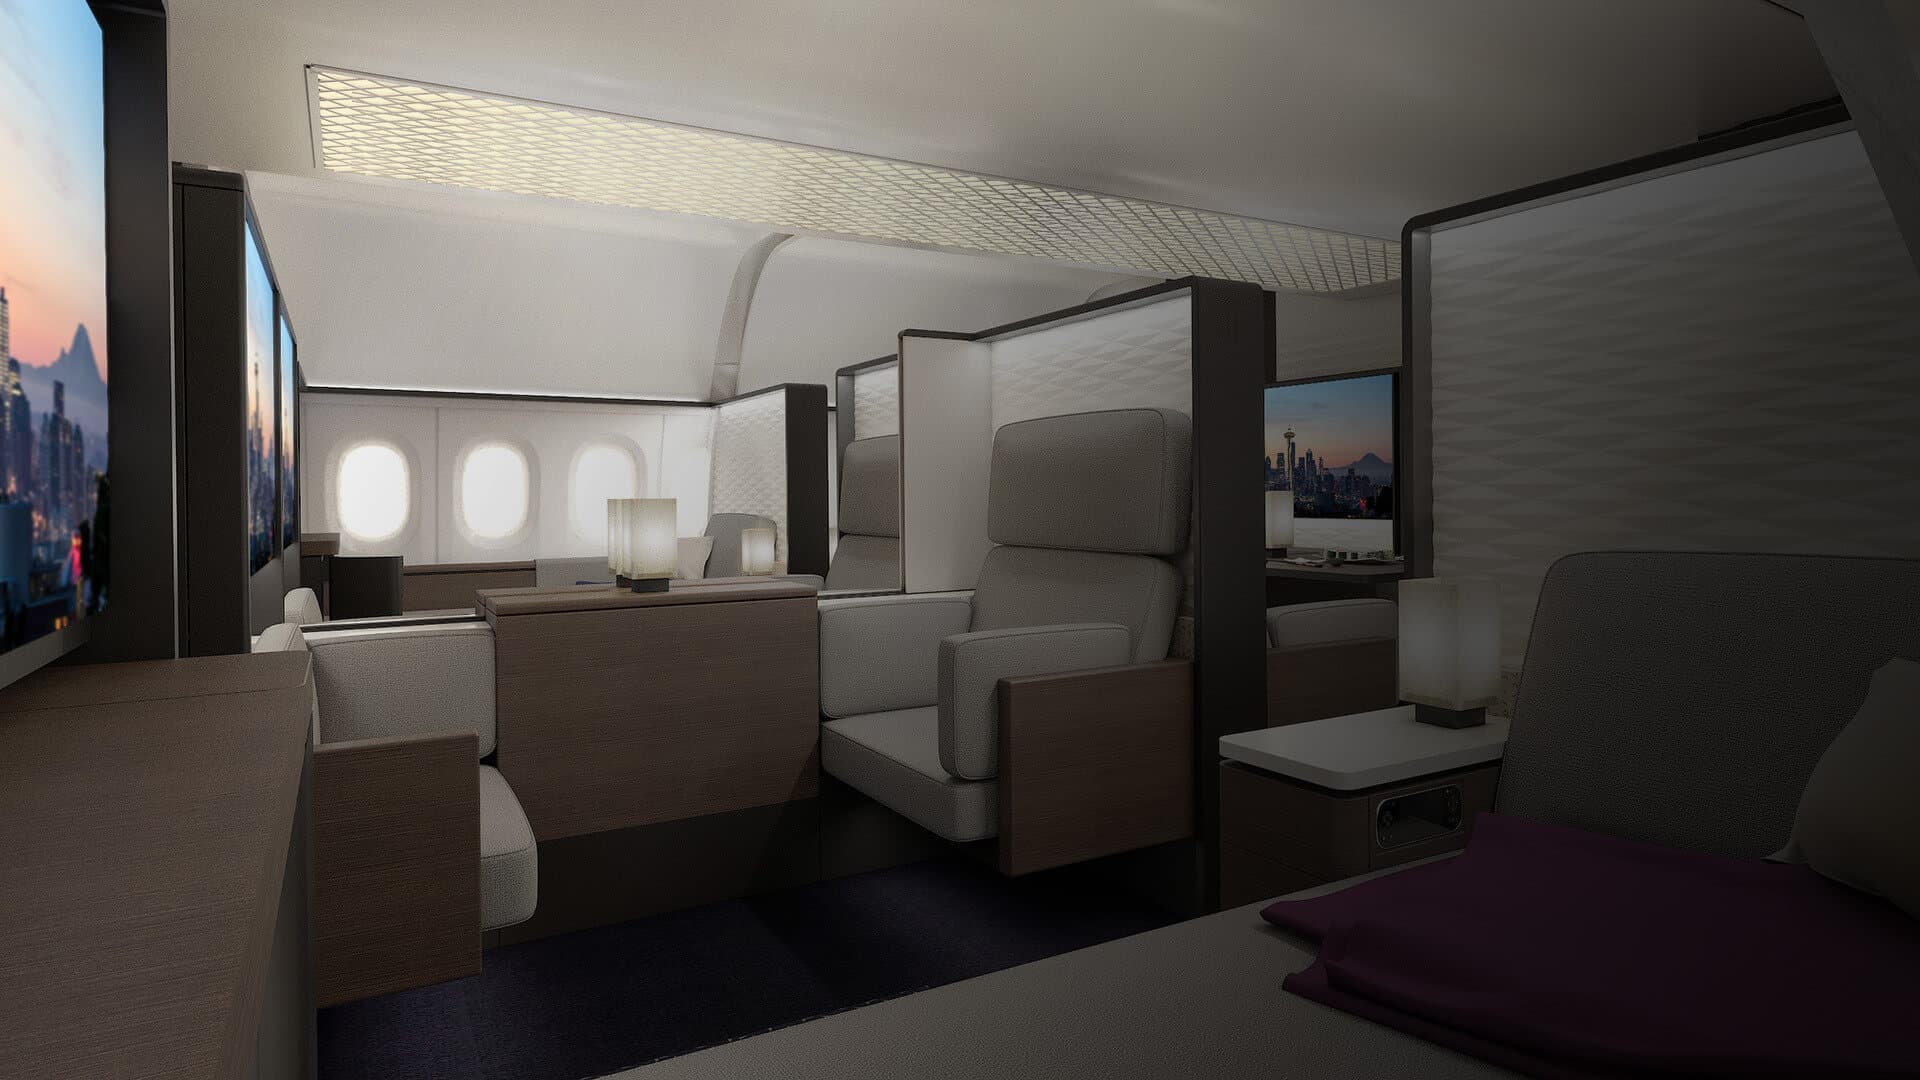 First Class passenger cabin experience concept